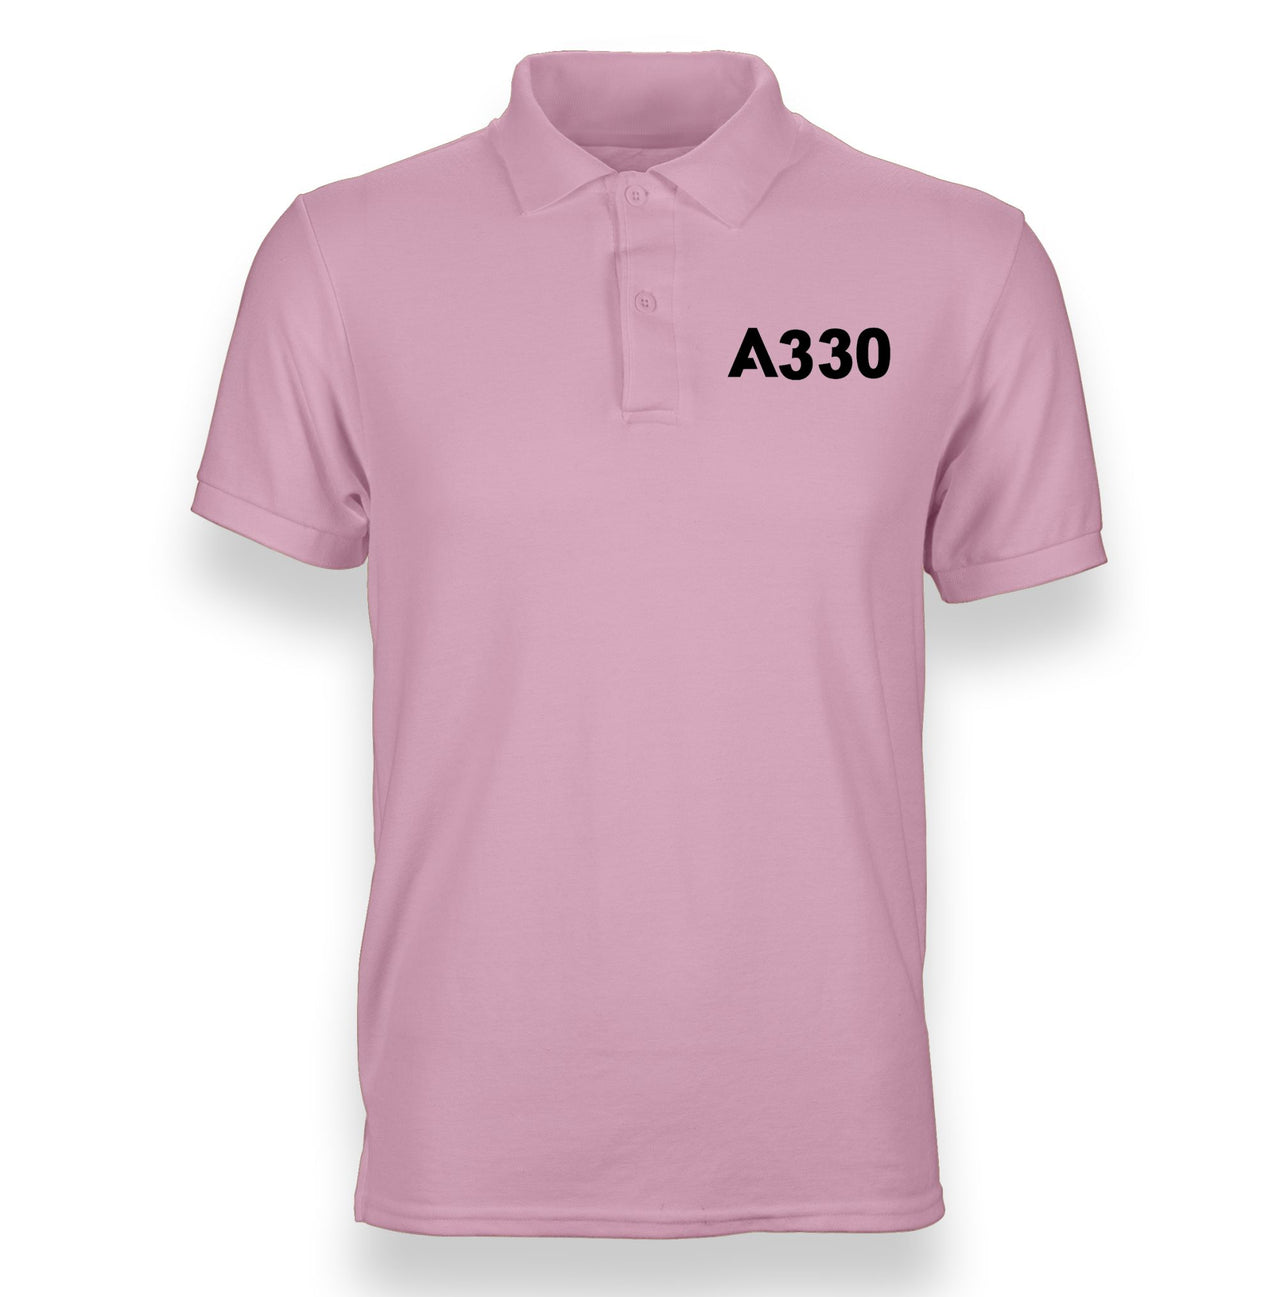 A330 Flat Text Designed "WOMEN" Polo T-Shirts